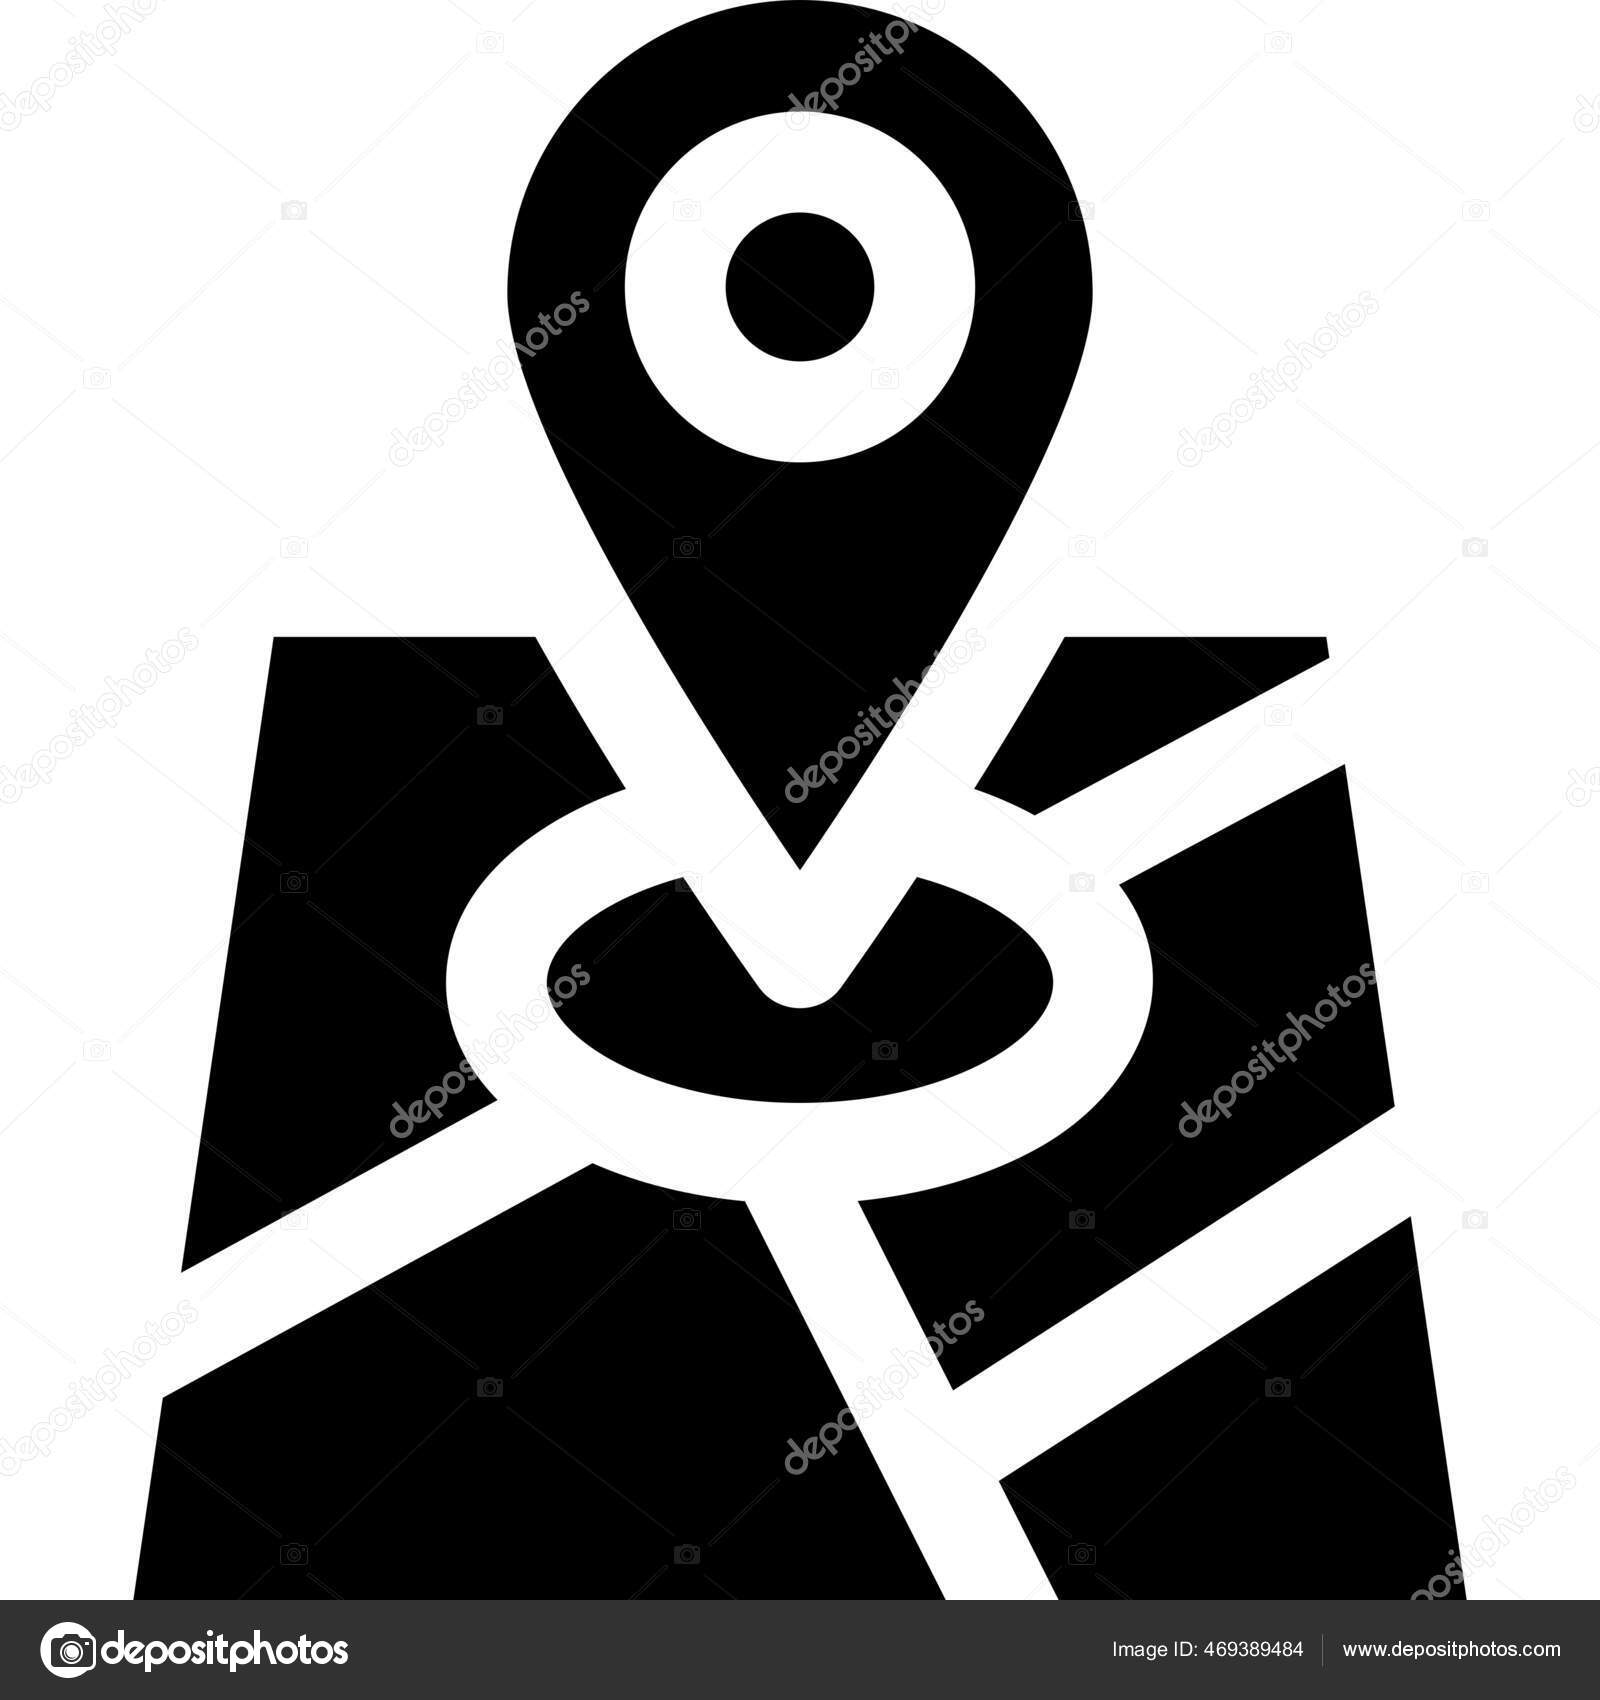 https://st2.depositphotos.com/47577860/46938/v/1600/depositphotos_469389484-stock-illustration-guide-journey-location-icon-business.jpg